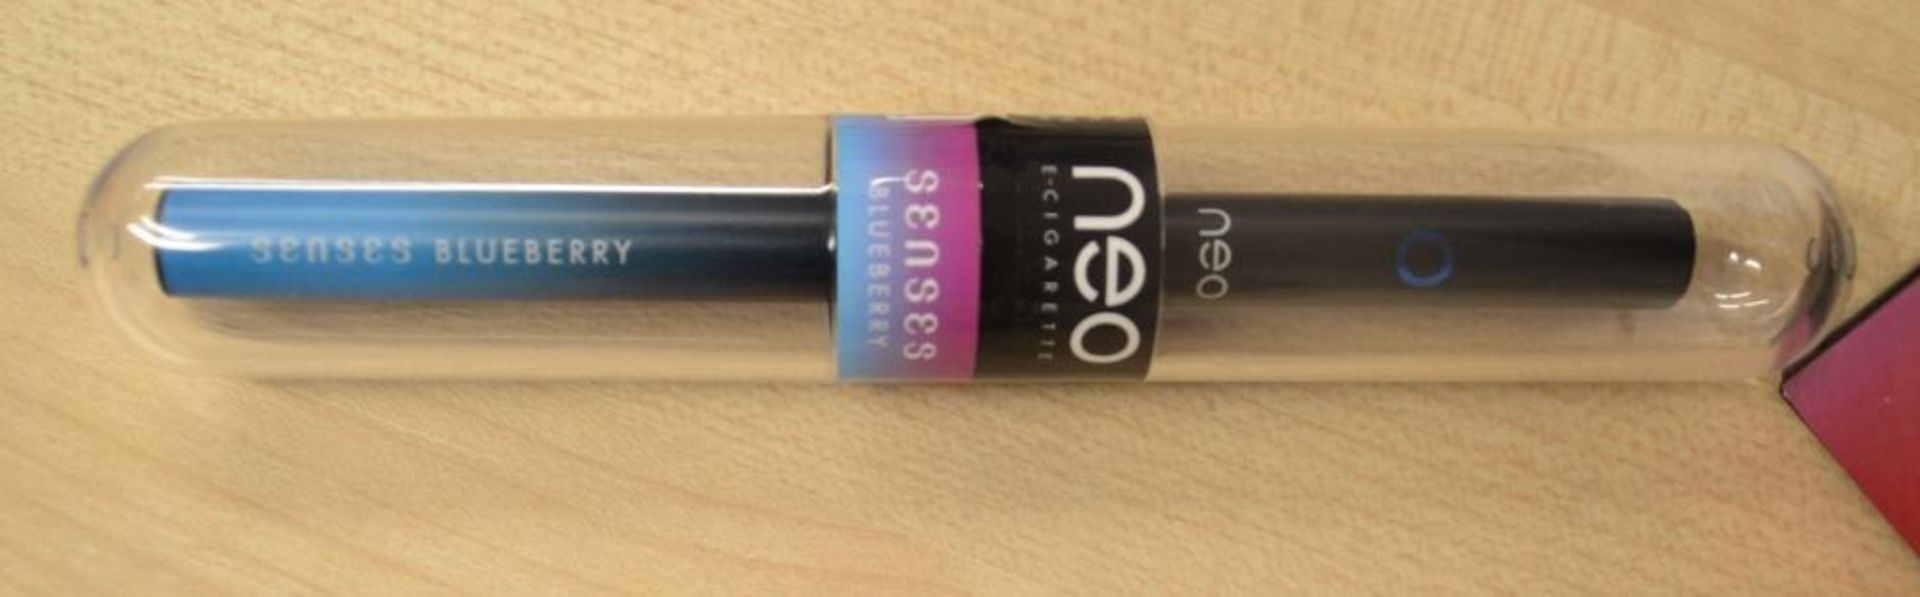 30 x Neo E-Cigarettes Senses Shisha Blueberry Disposable Electronic Cigarettes - New & Sealed Stock - Image 4 of 5